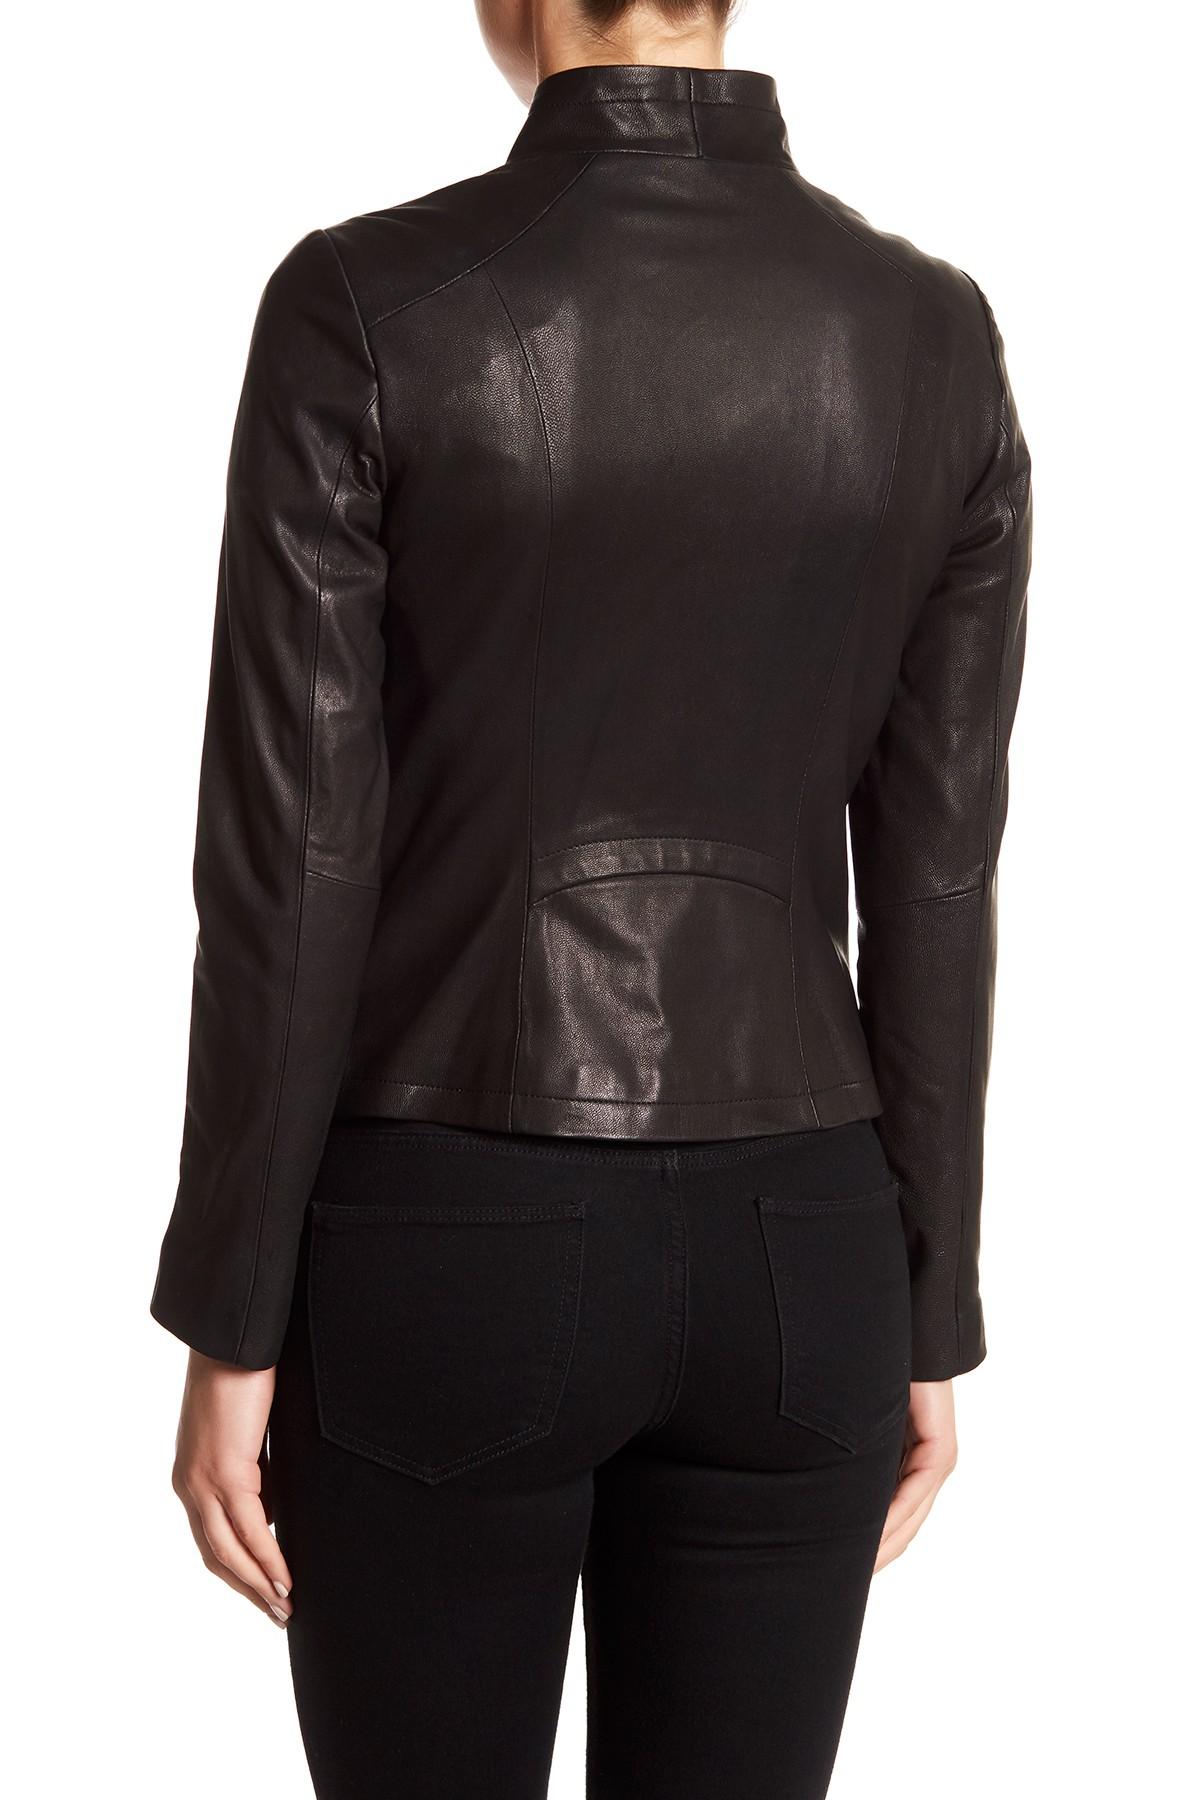 Cole Haan Asymmetrical Front Zip Genuine Leather Jacket in Black - Lyst